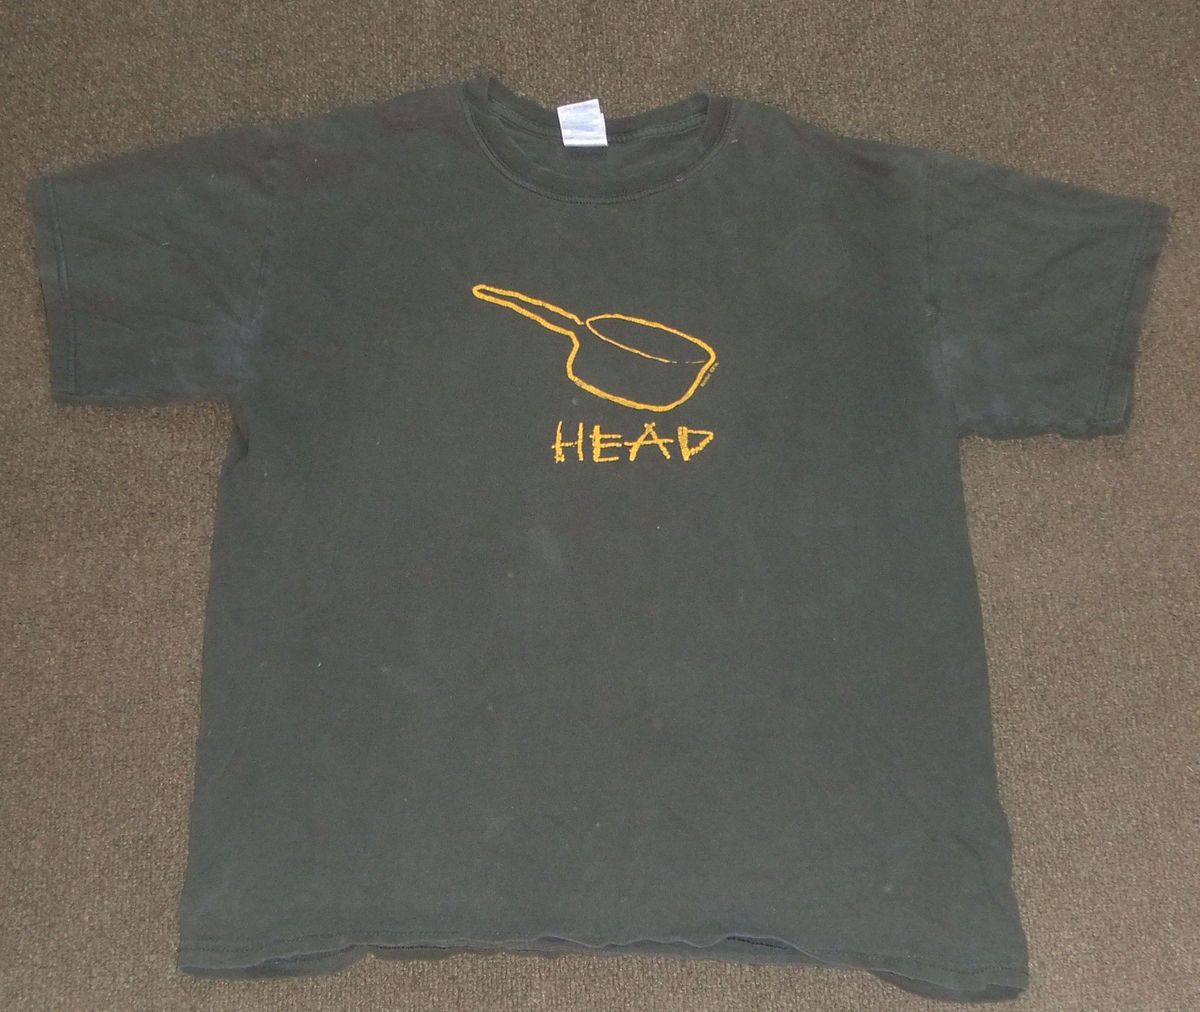 Pot Head Graphic Humor T Shirt Large